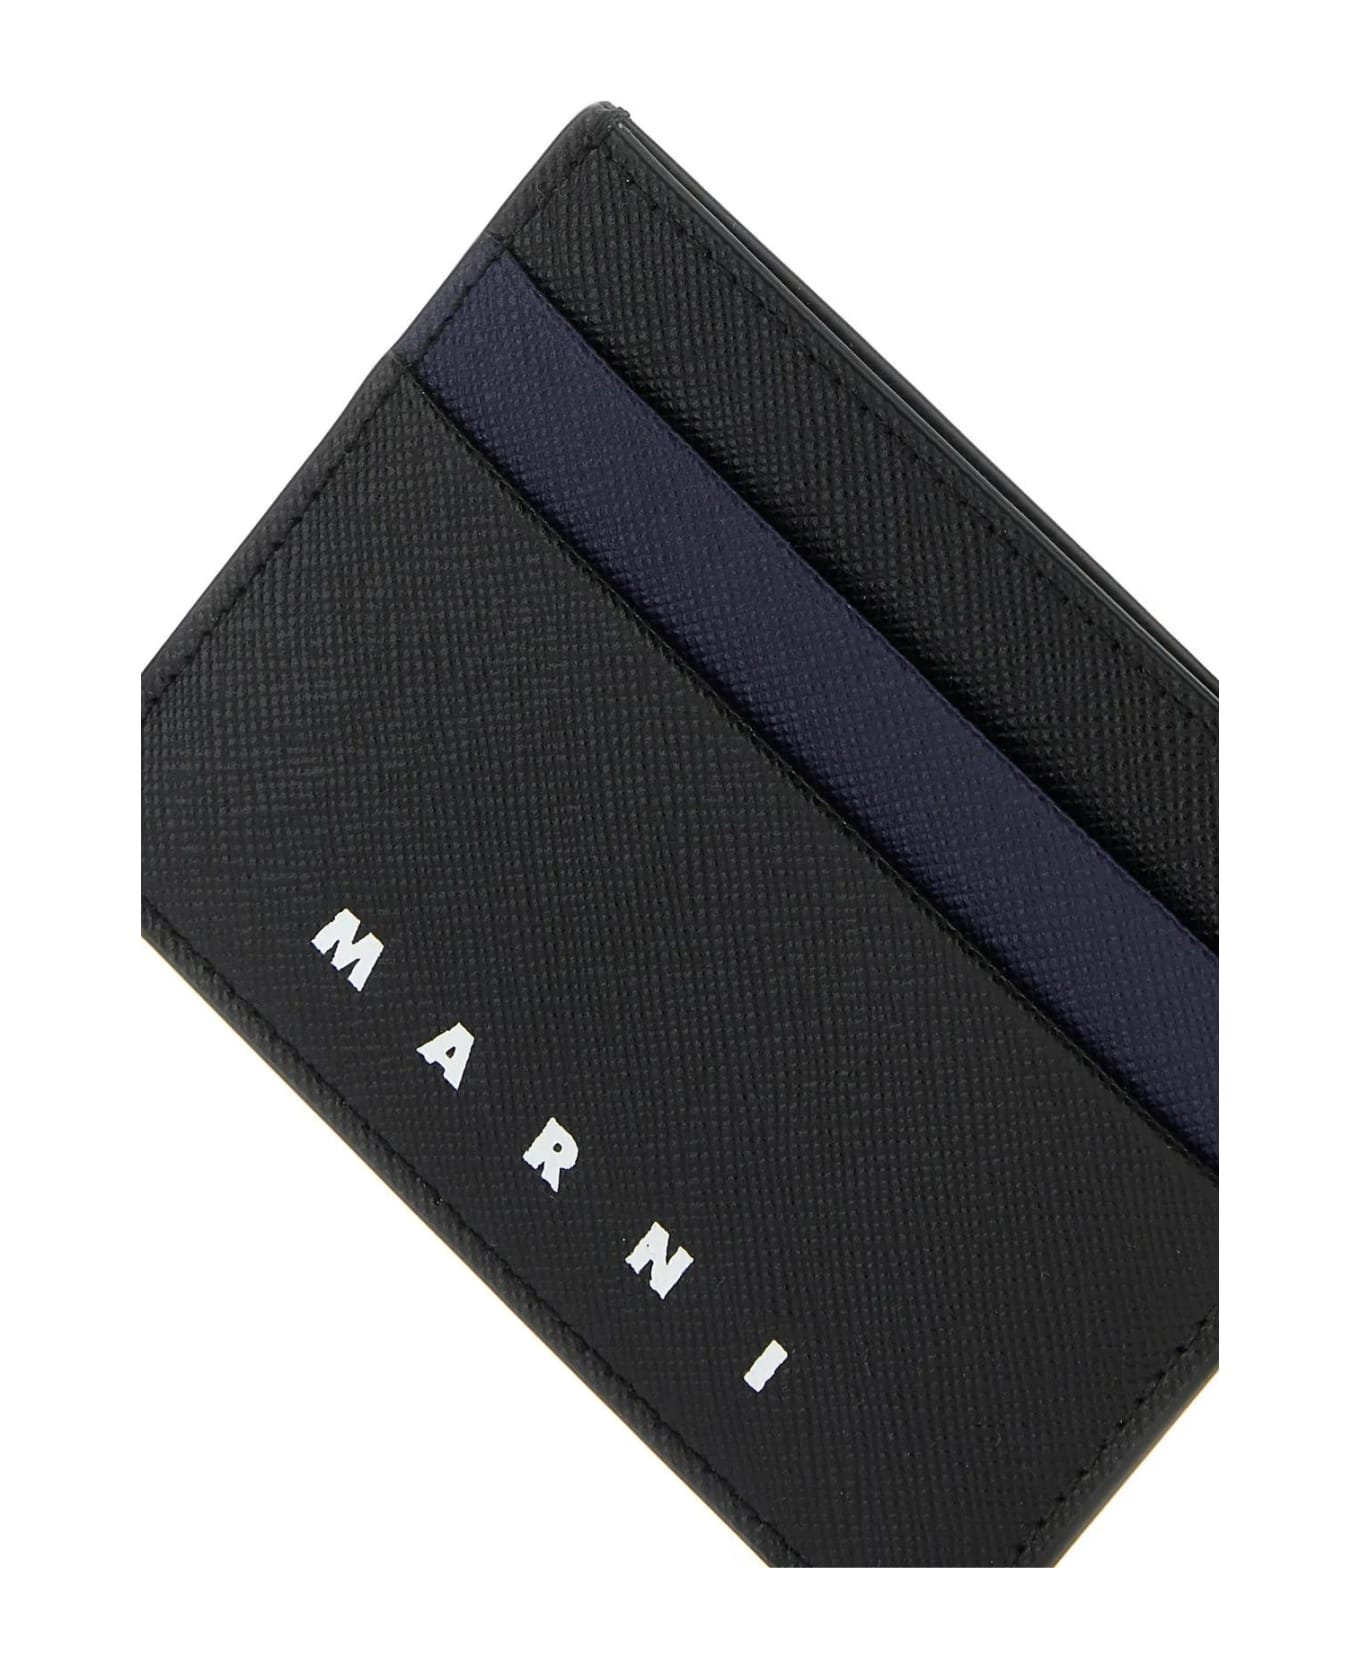 Marni Black Leather Card Holder - Z576N